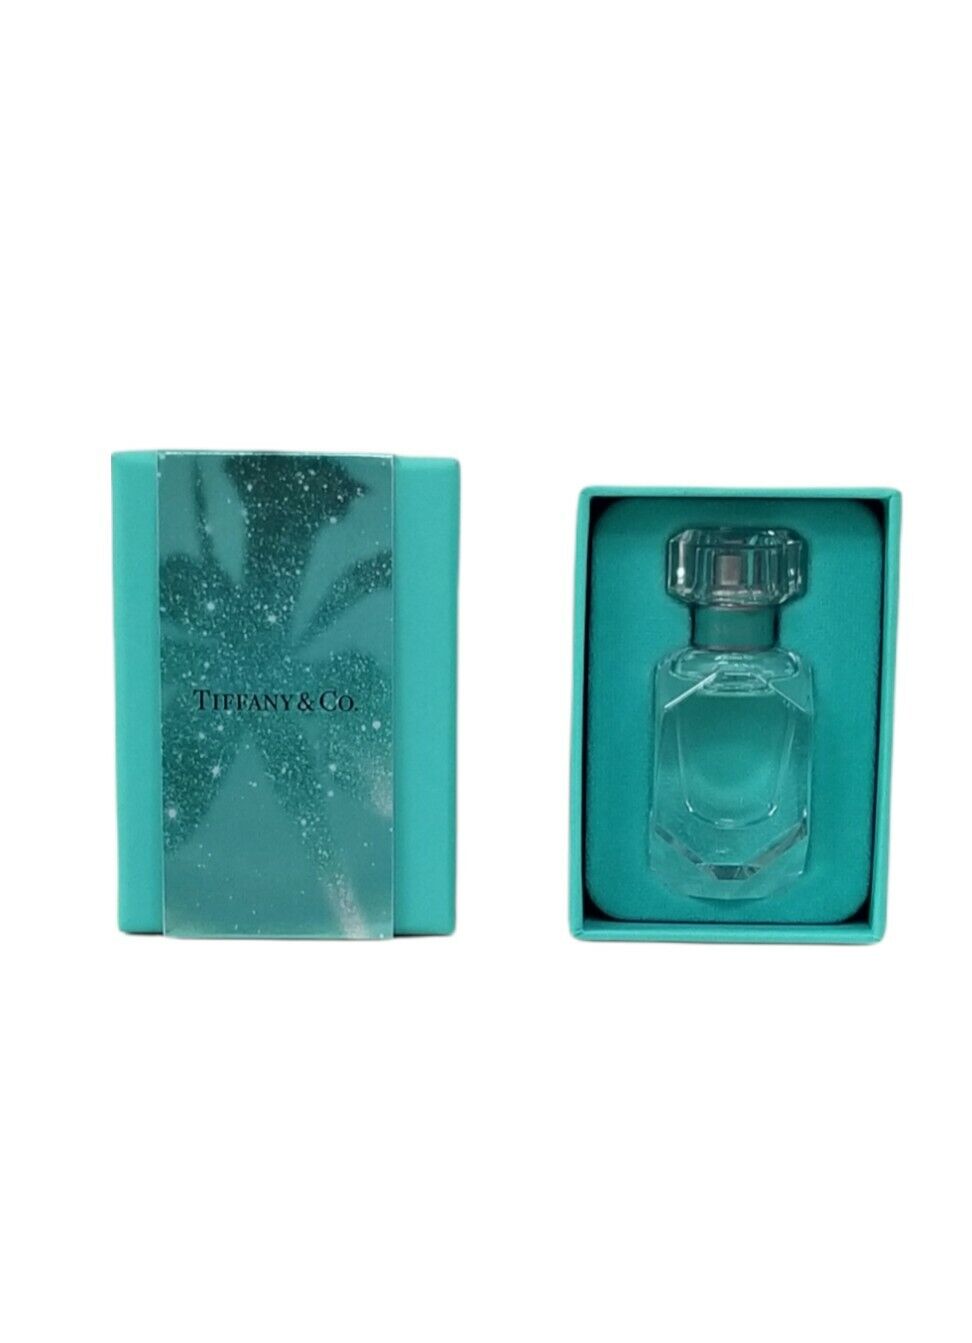 TIFFANY & Co. eau de parfum EDP travel size mini 0.16 oz 5 ml New in Box